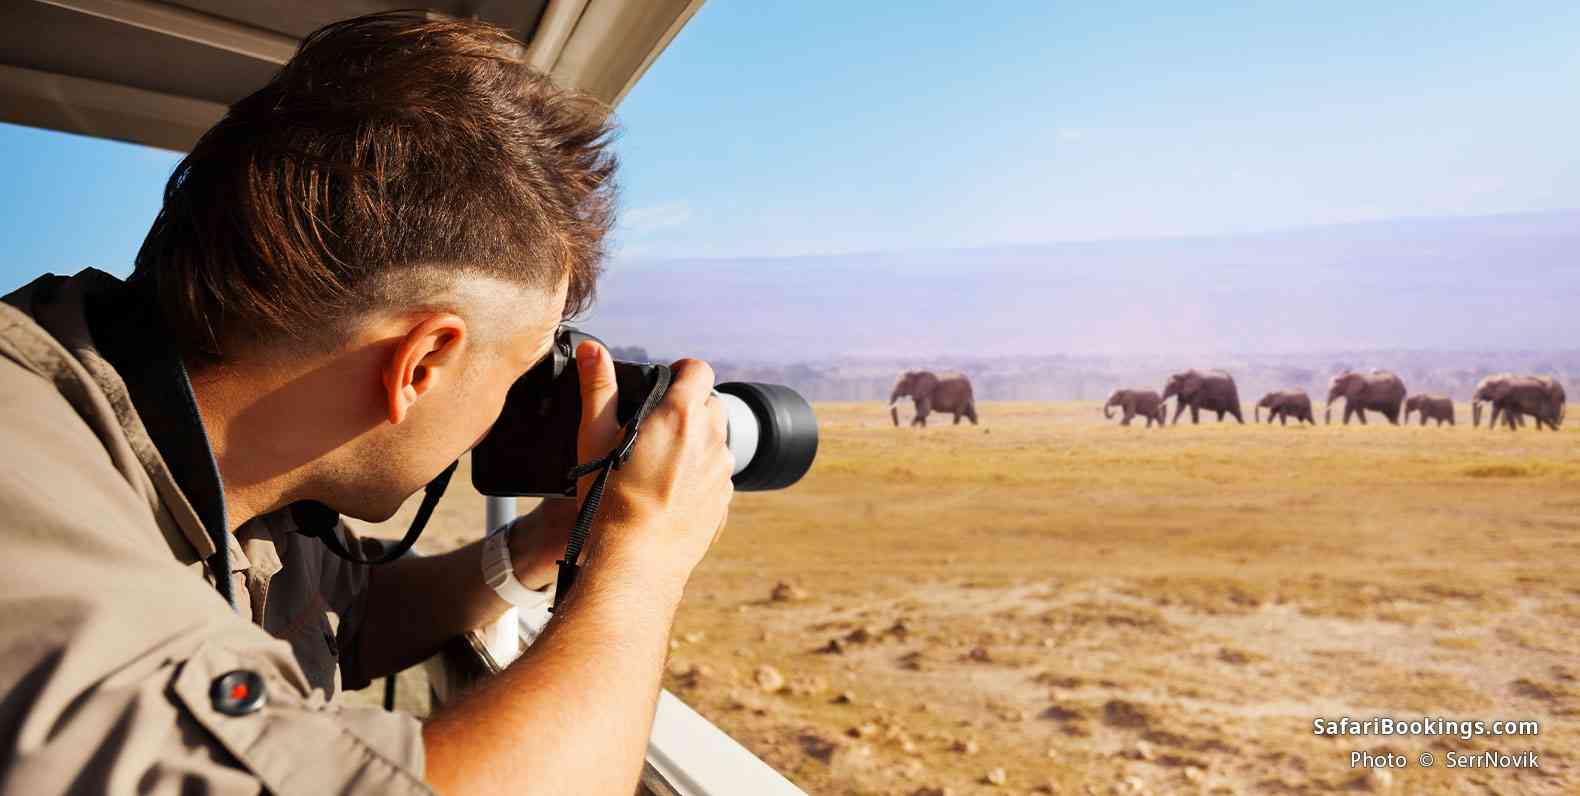 Tourist photographing elephants